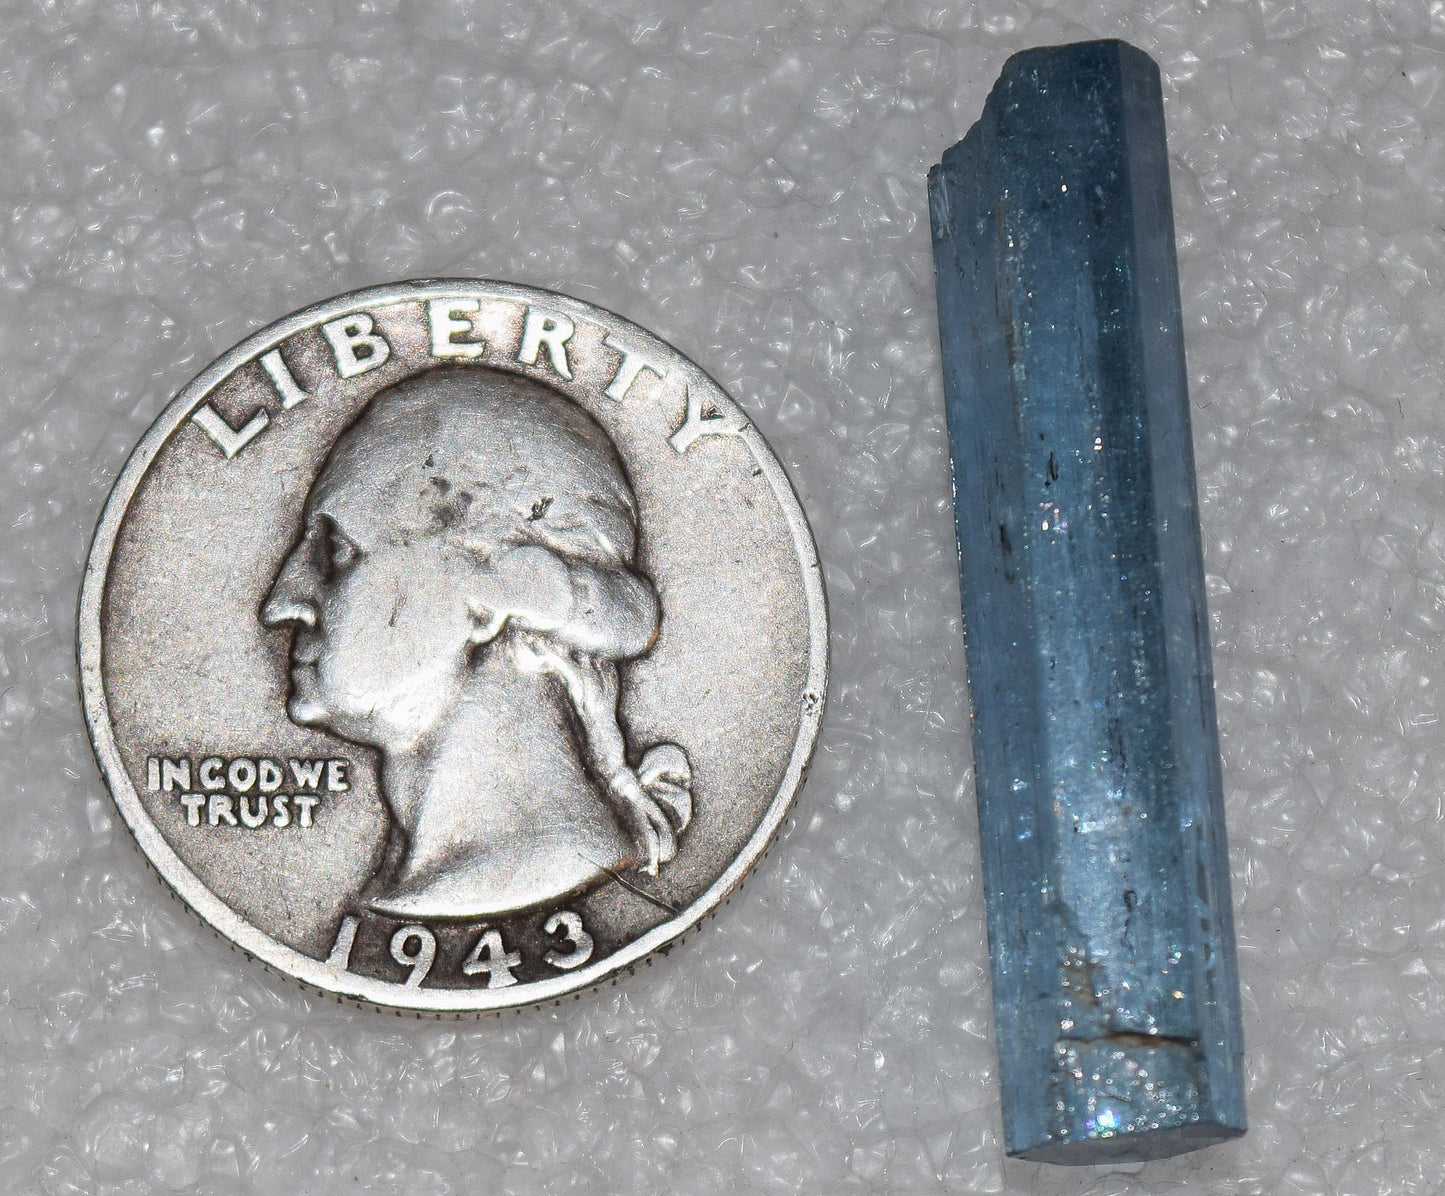 Santa Maria blue, Vietnamese Aquamarine crystal - nearly eye clean, nearly 20 carats!